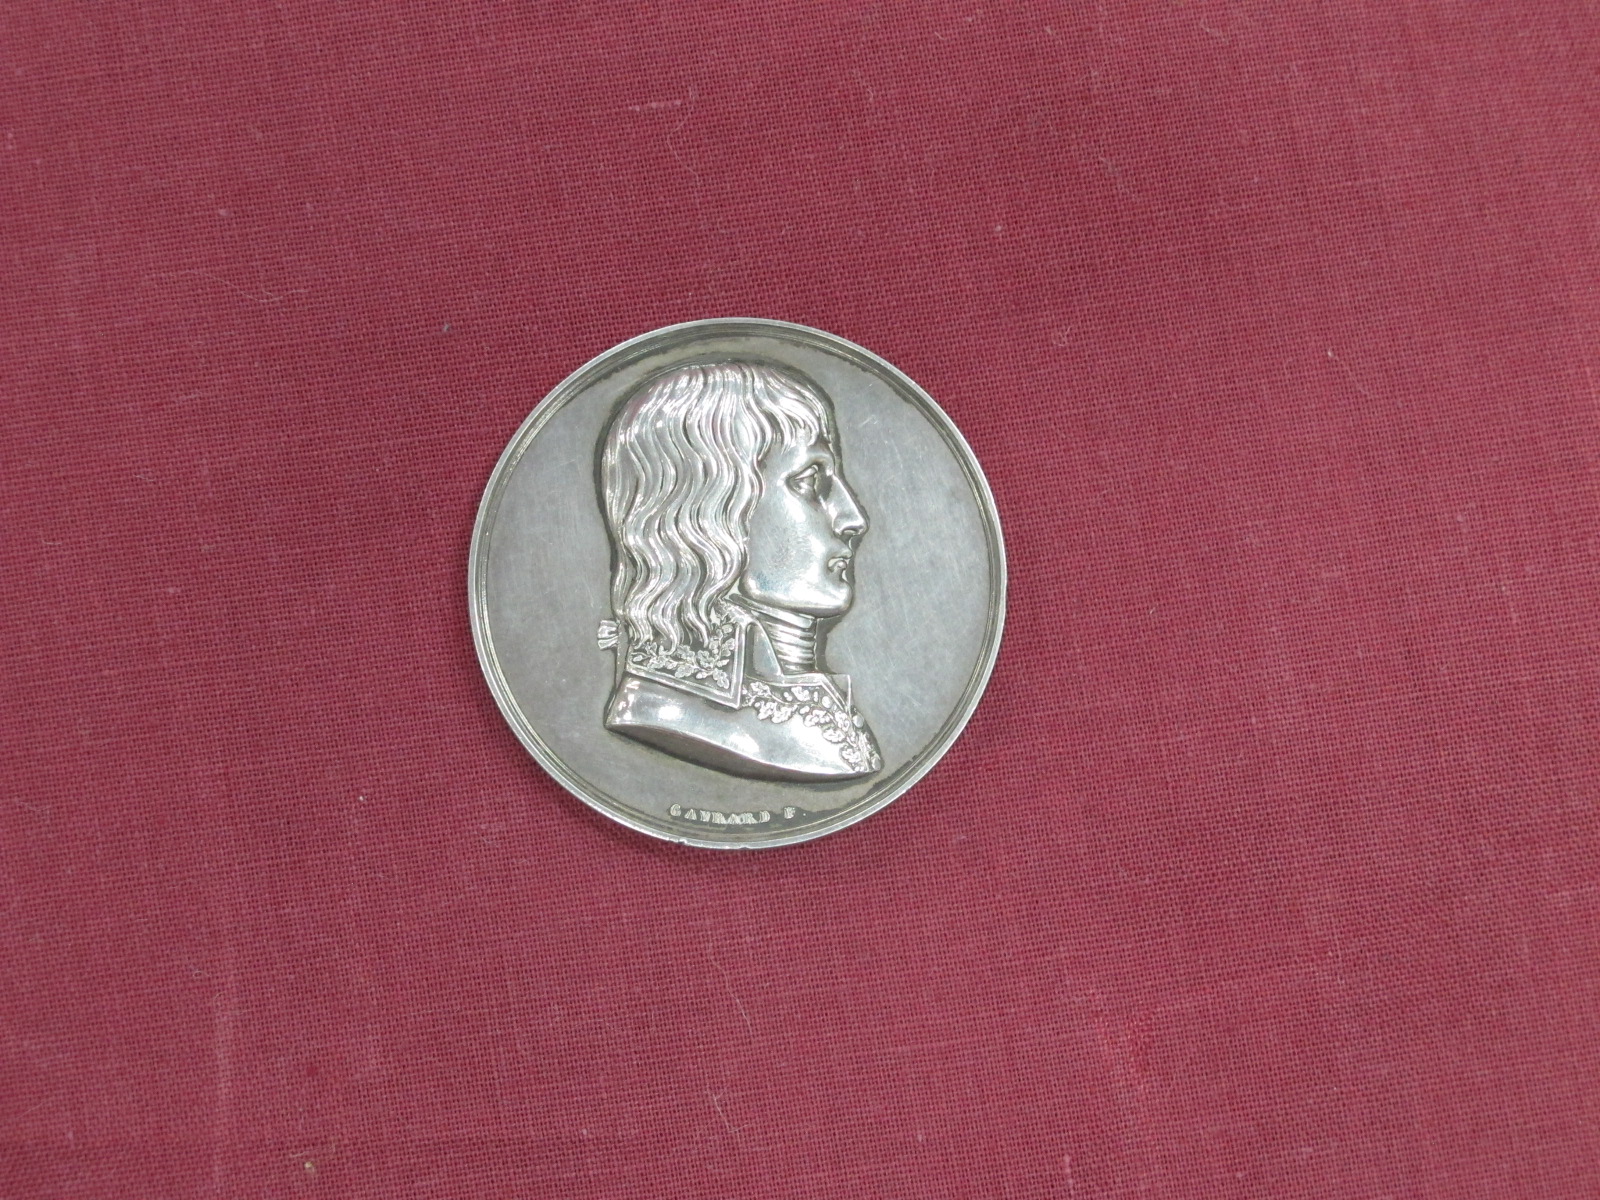 Silver Napoleon Medal, Battle de Montenotte 1796, 'F. Gayrard' to obverse side, 'Denon Dir' to